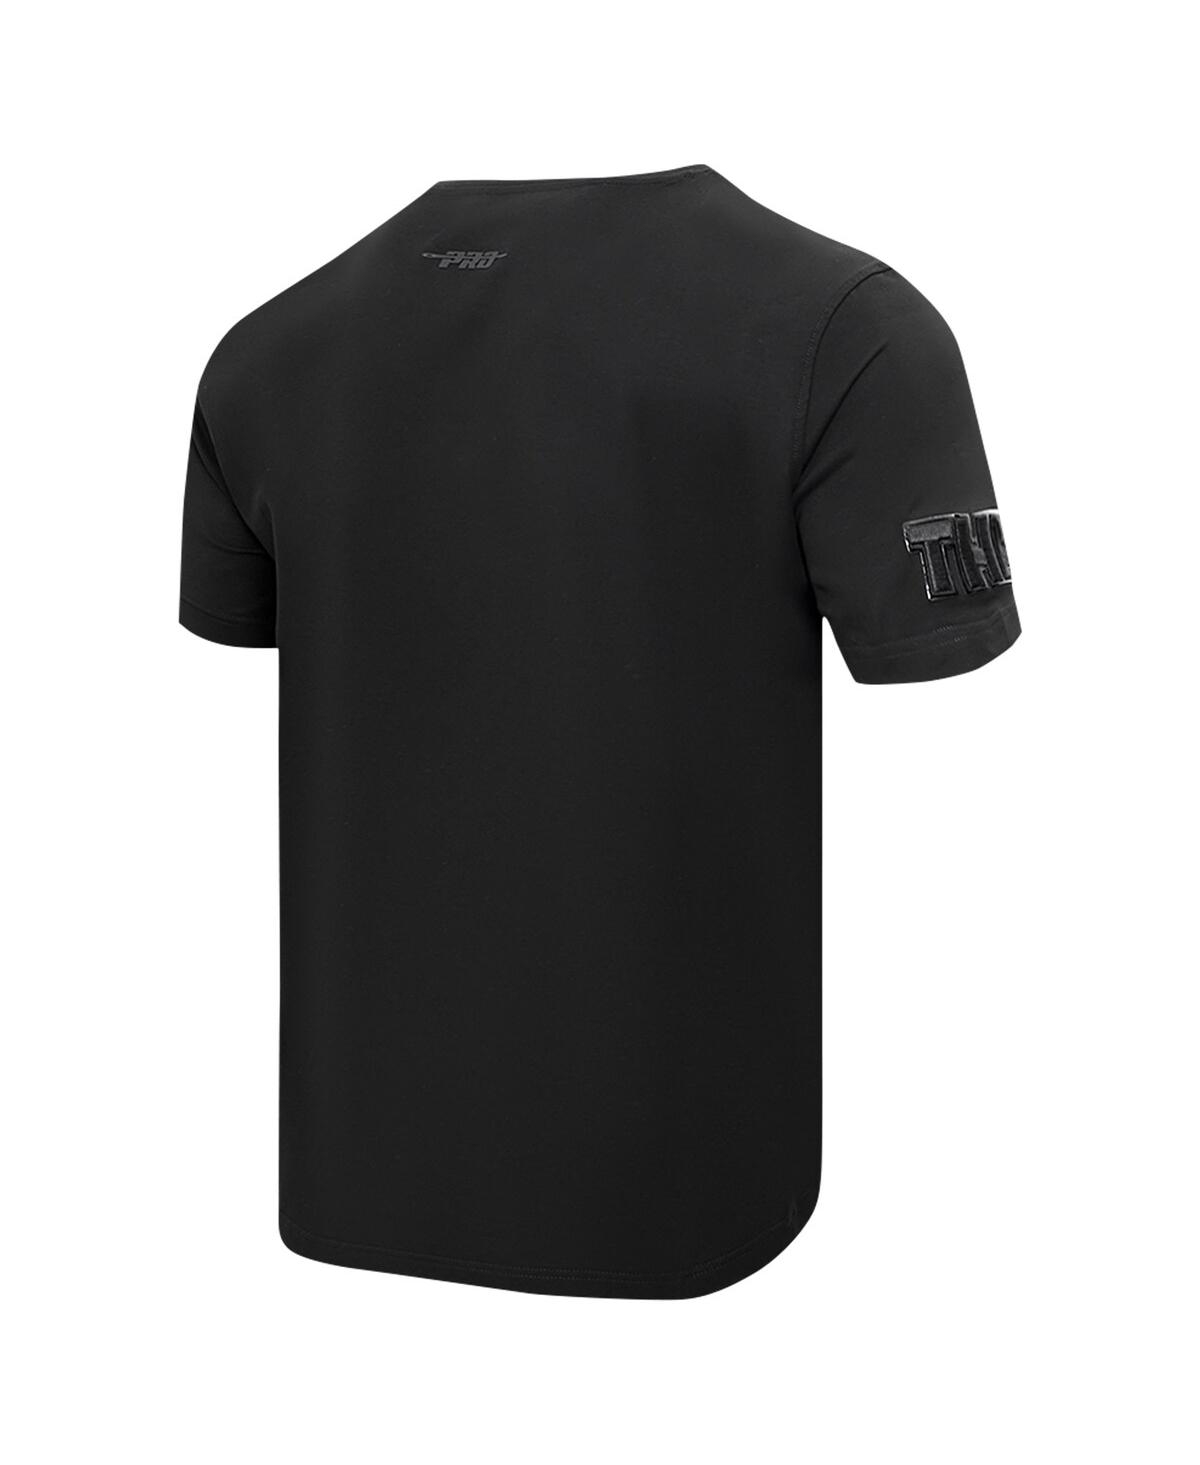 Shop Pro Standard Men's  Ohio State Buckeyes Triple Black T-shirt